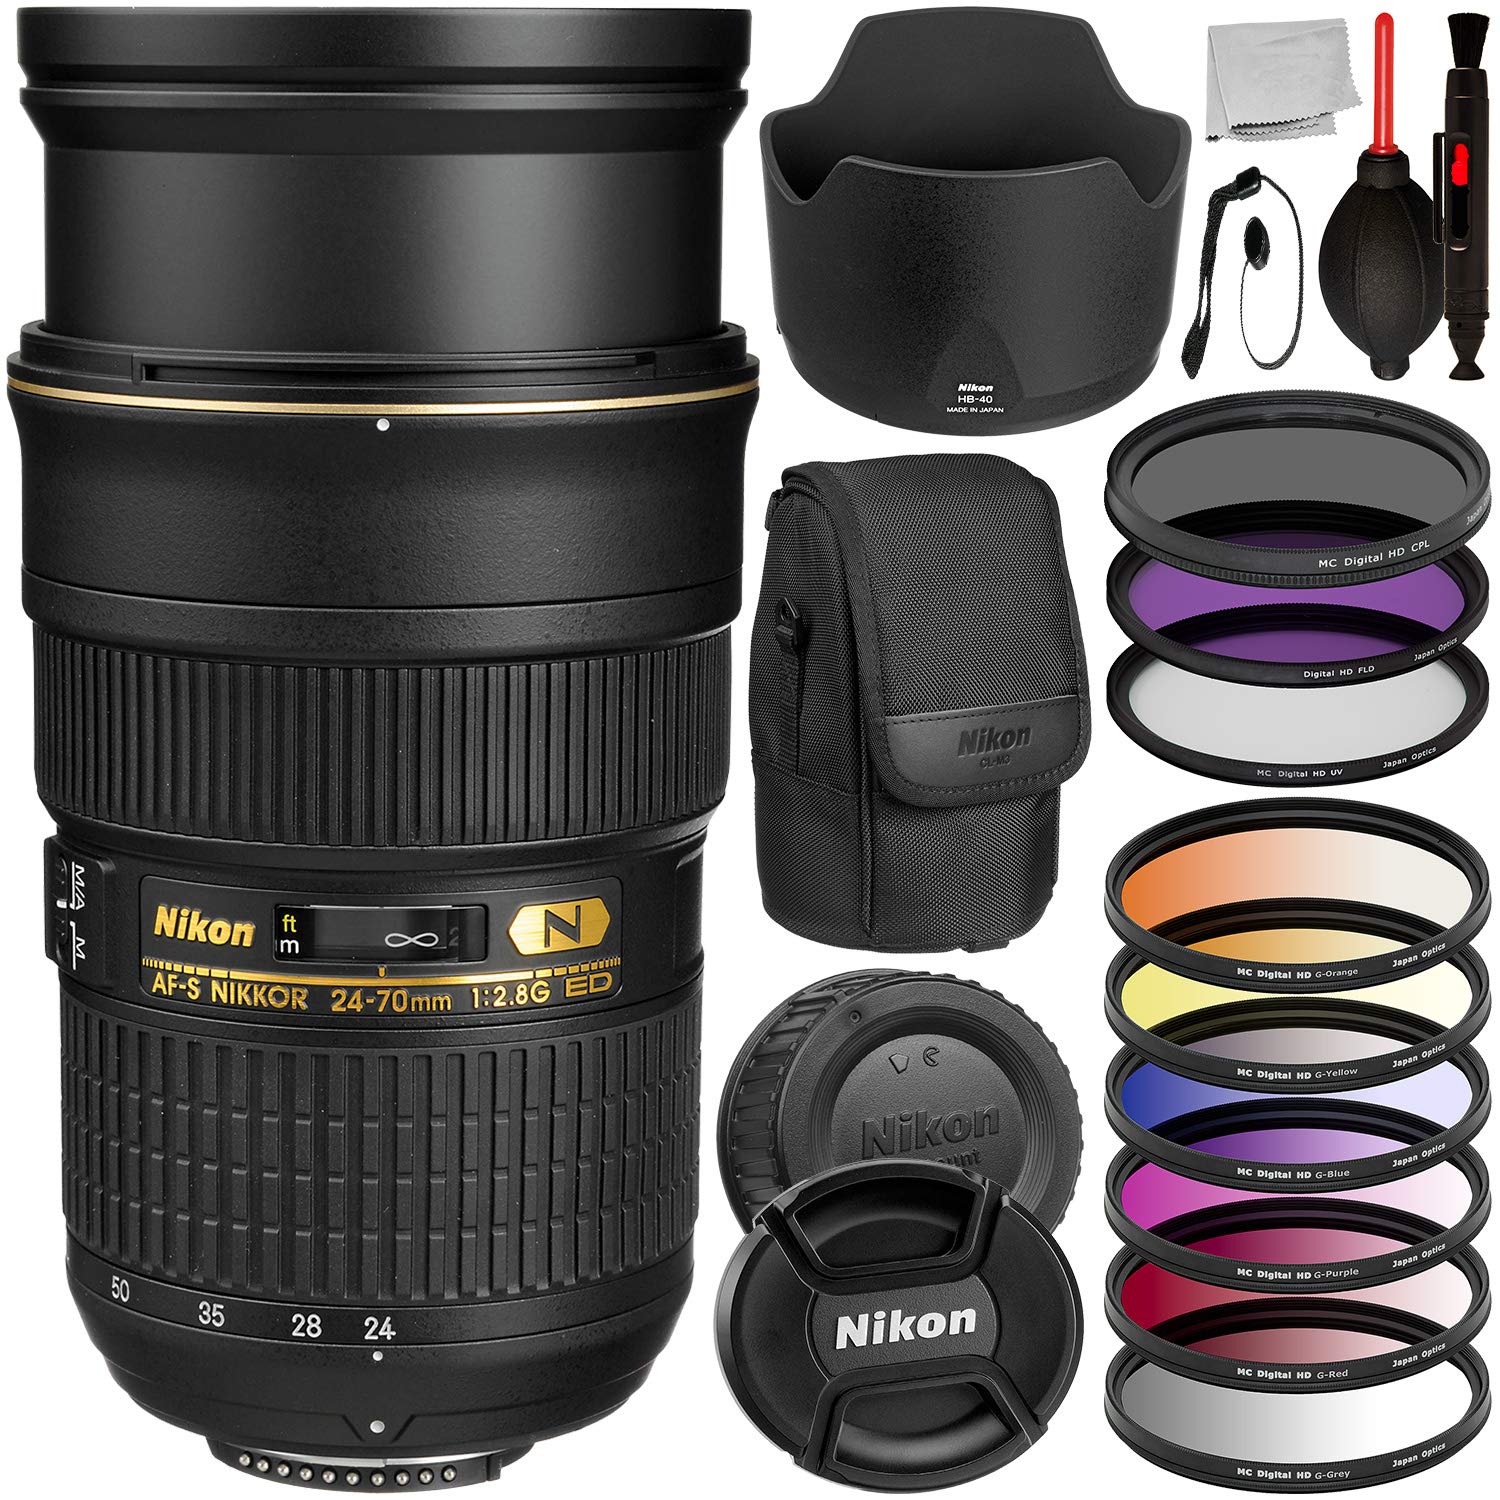 Nikon AF-S Nikkor 24-70mm f/2.8G ED Autofocus Lens -2164 with Essential Accessory Bundle